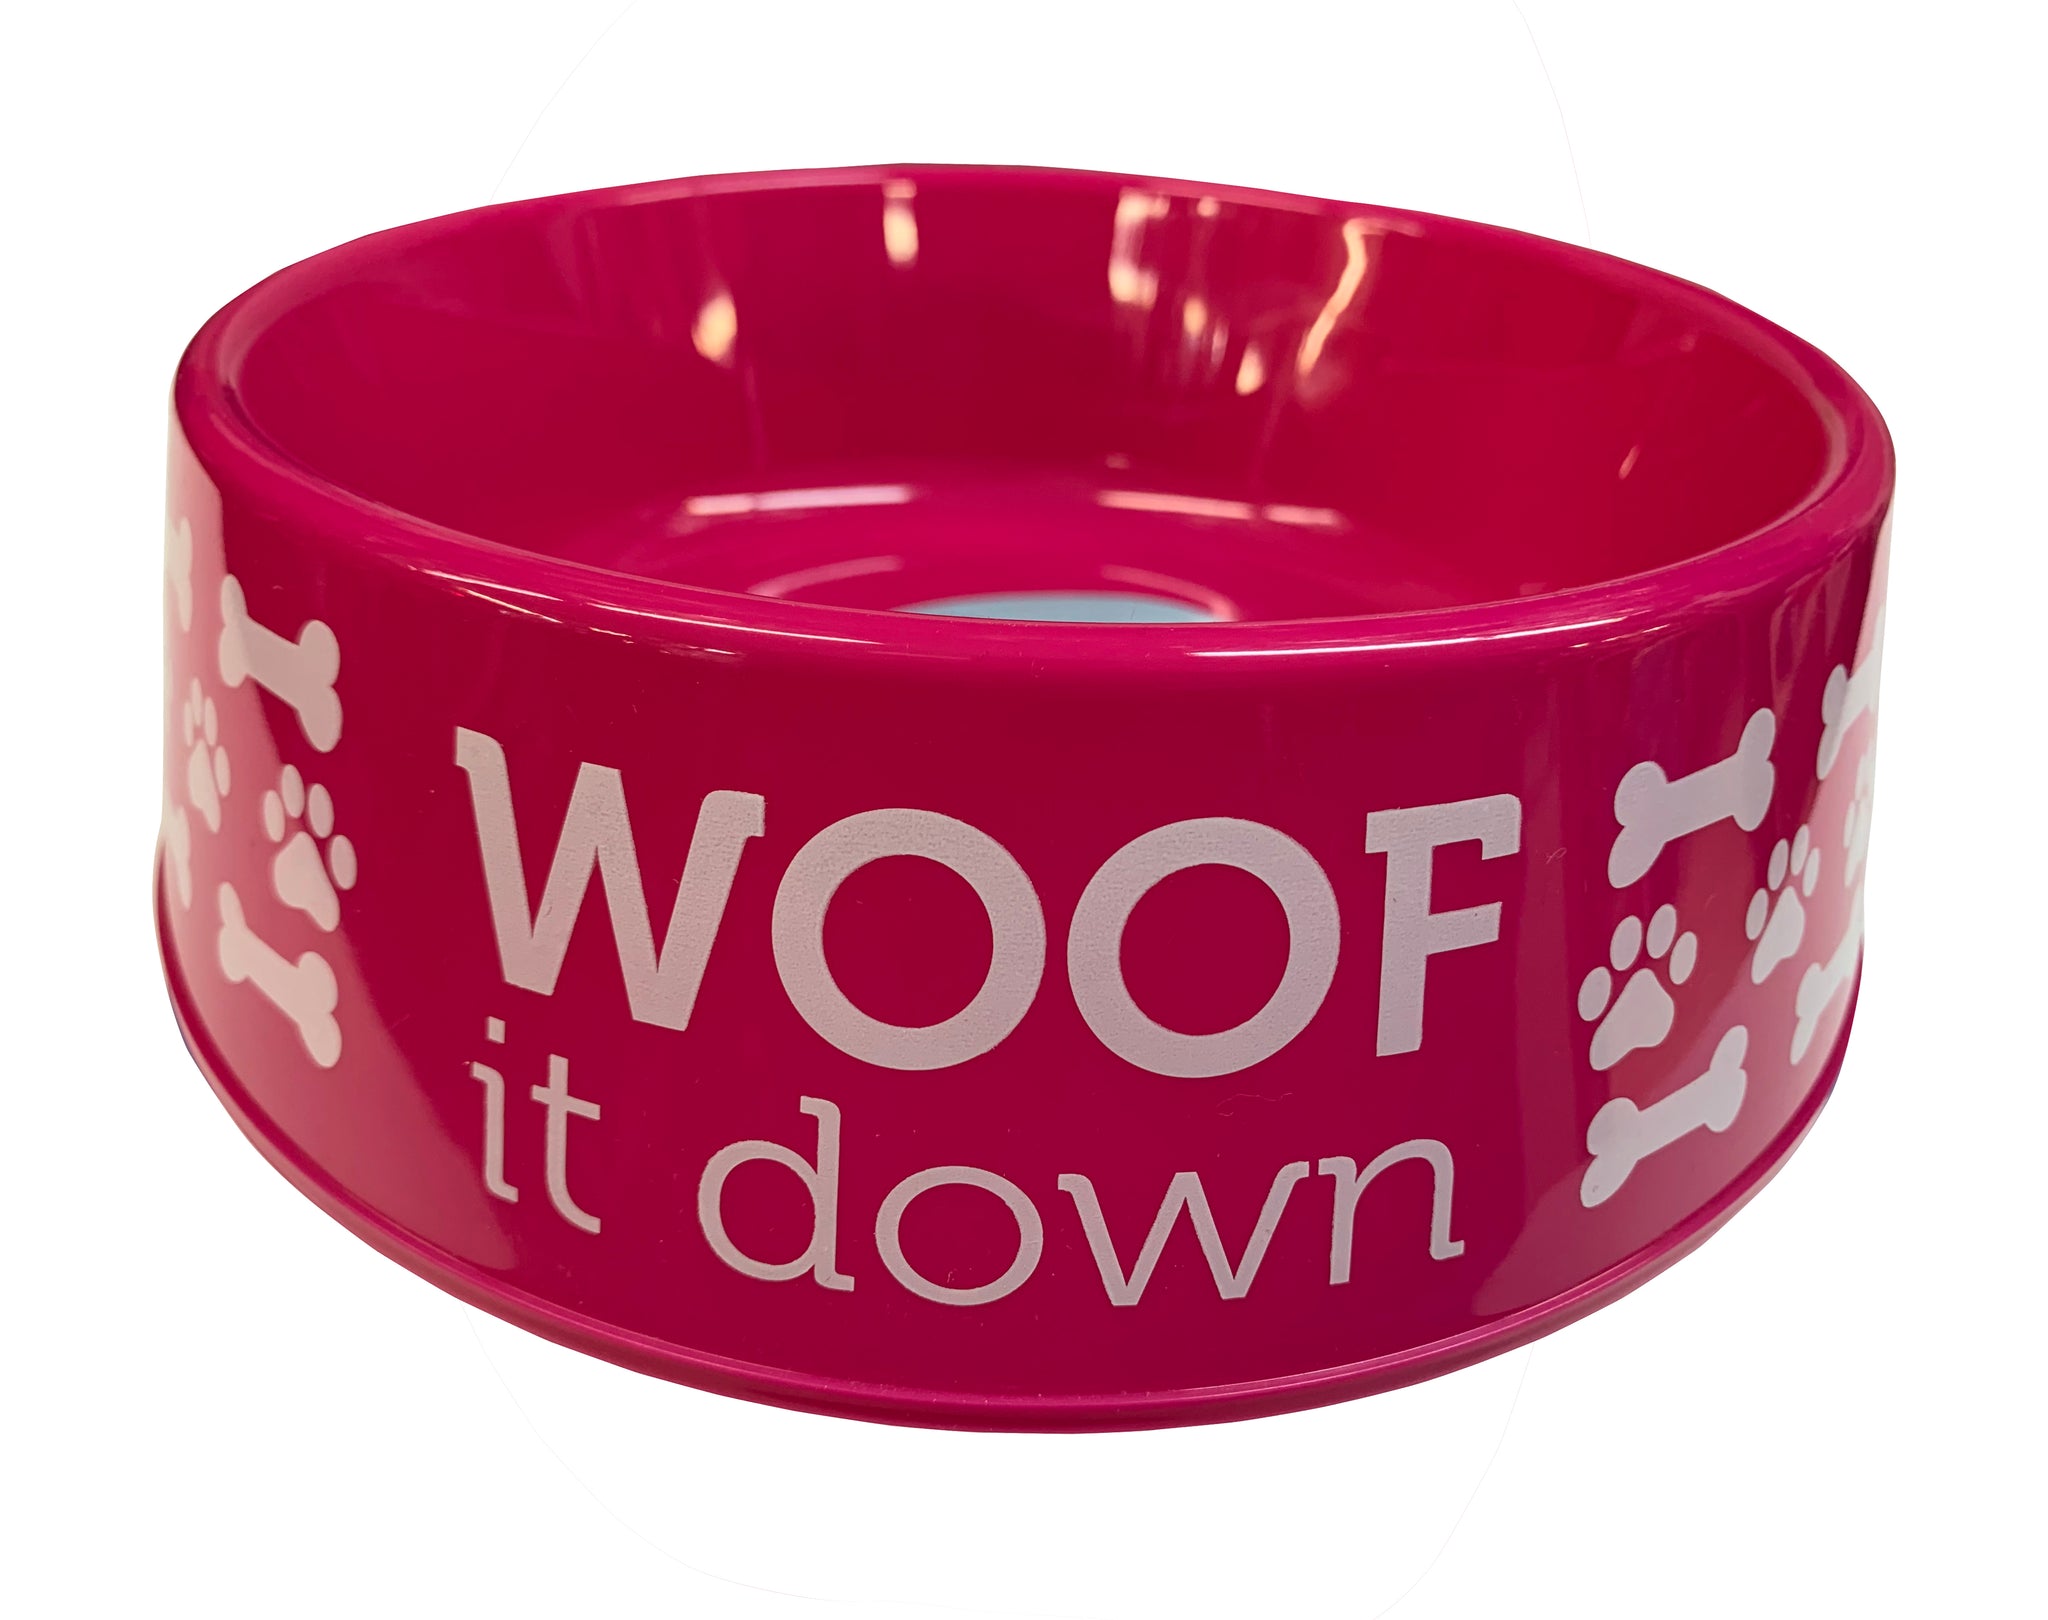 Forest Guys Dog Bowls Cat Bowls (Plastic Bowls, Pink 4-Pack)